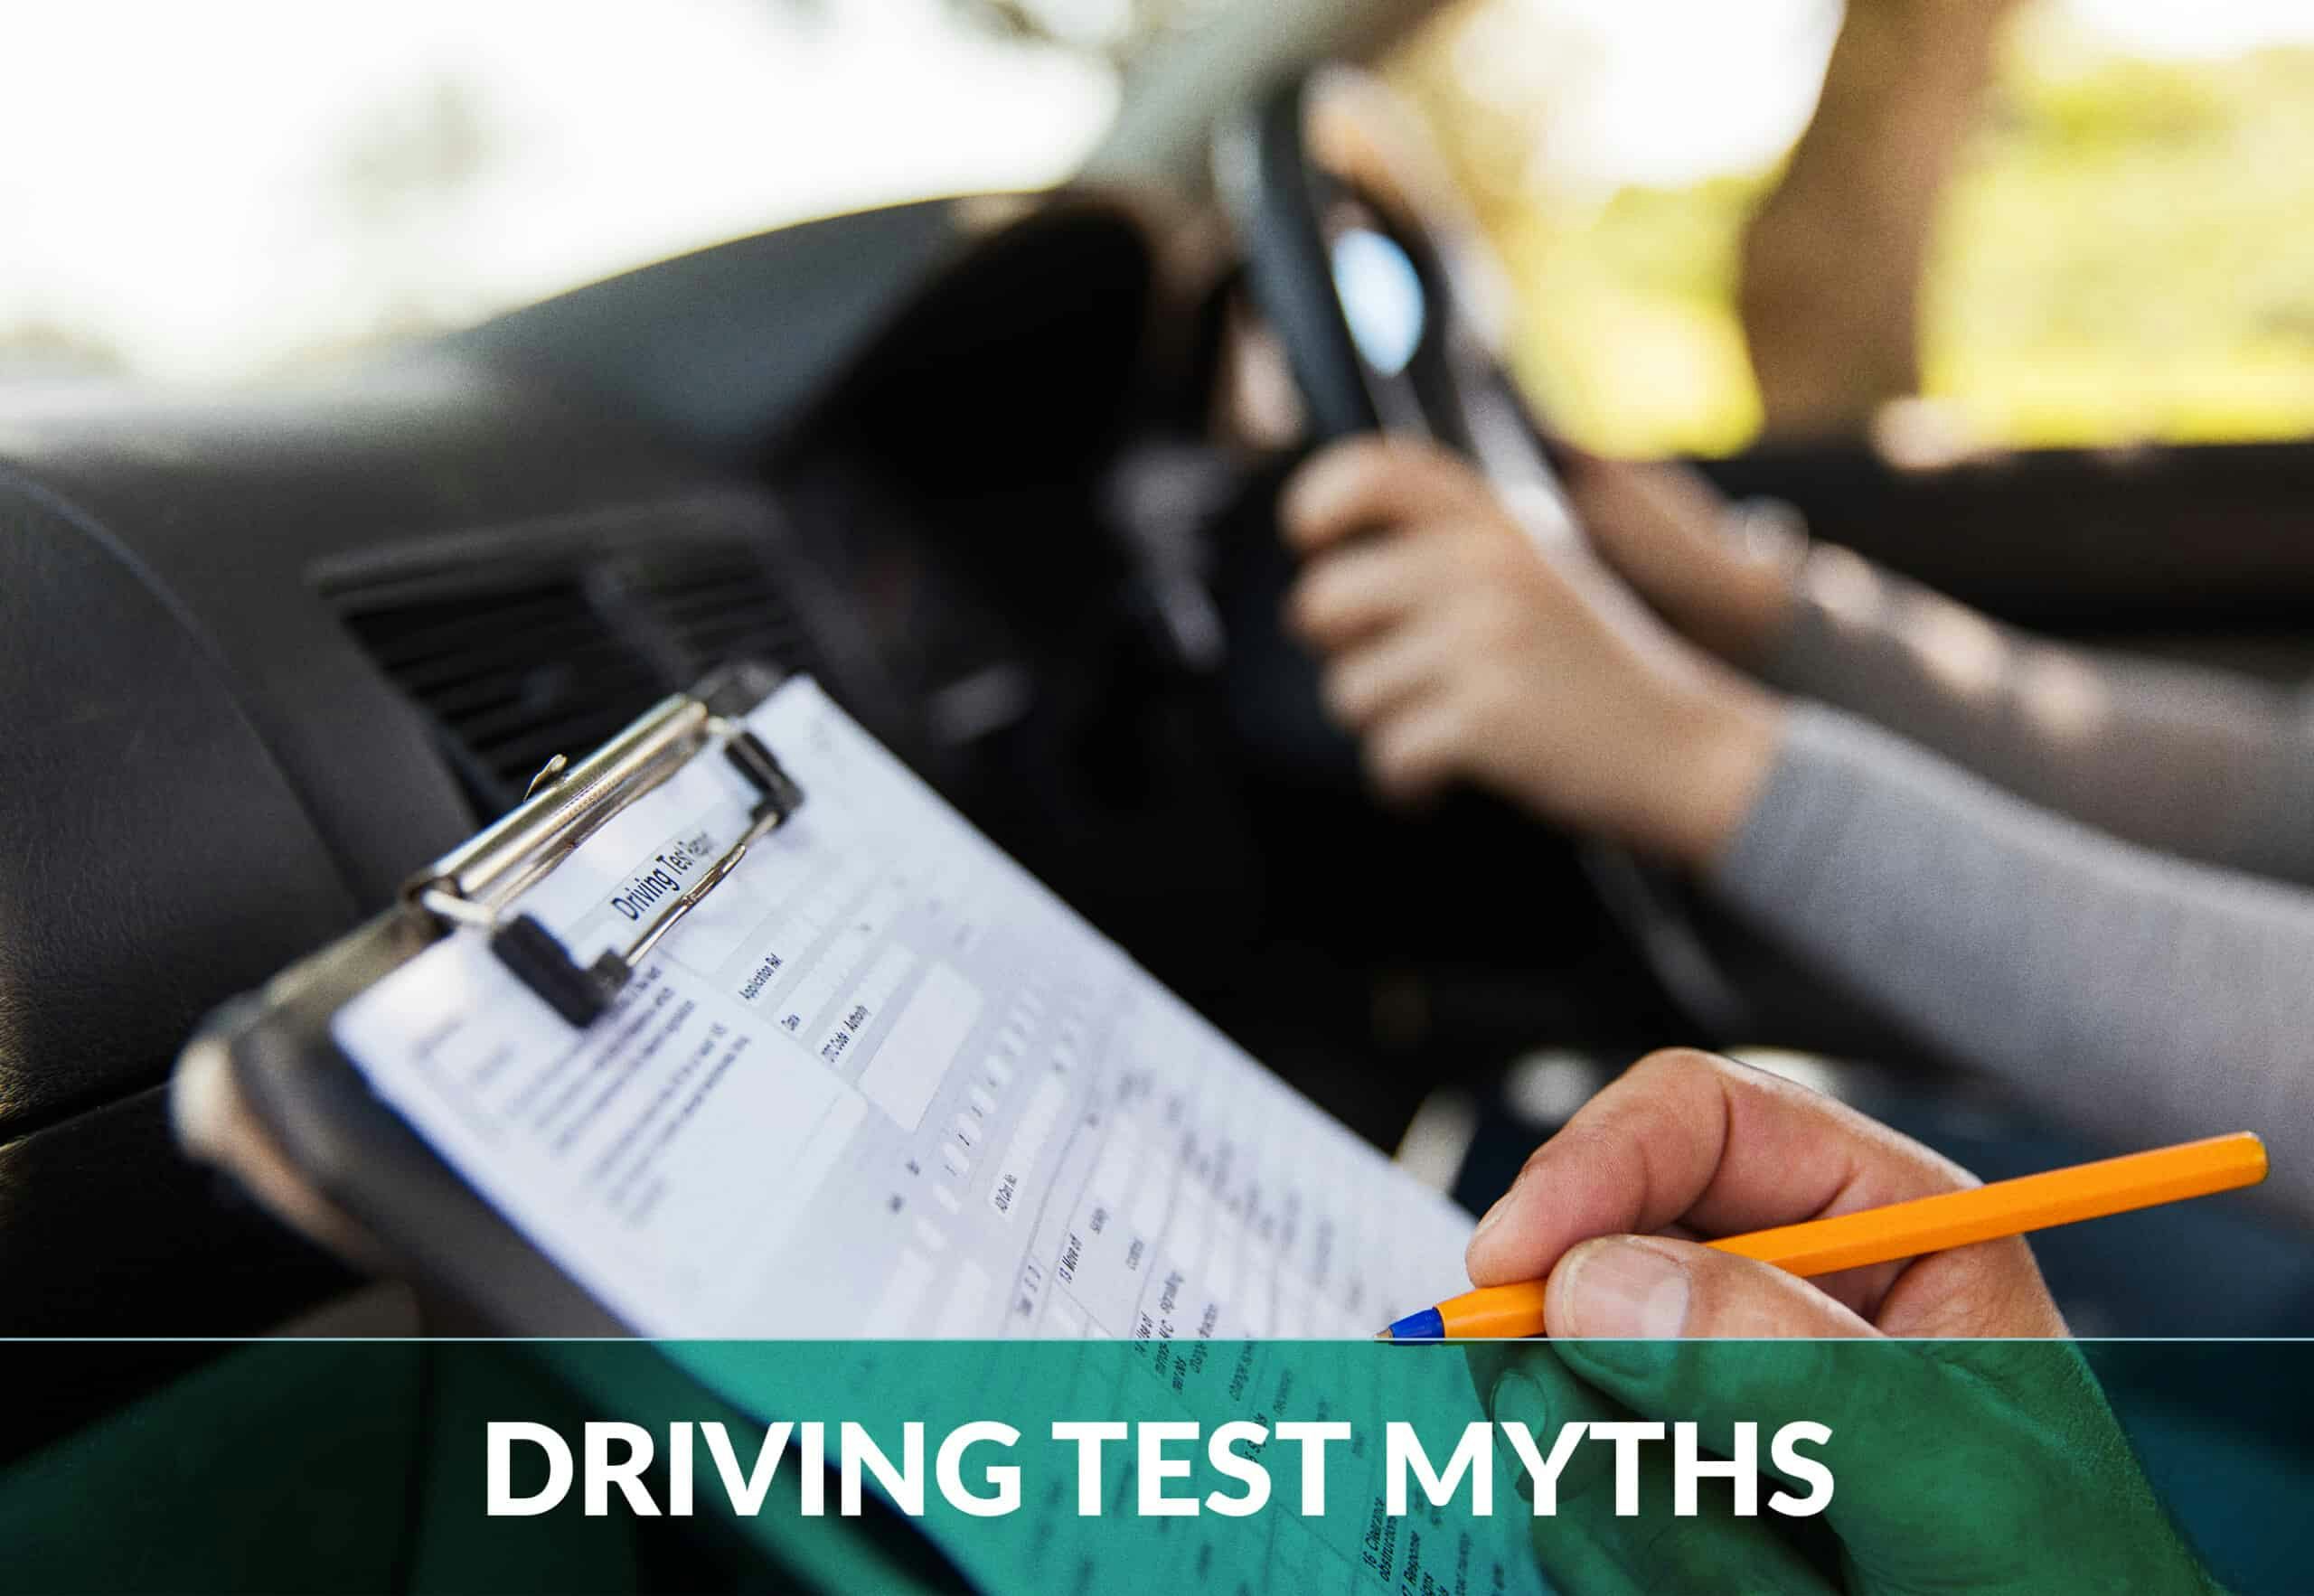 Driving test myths